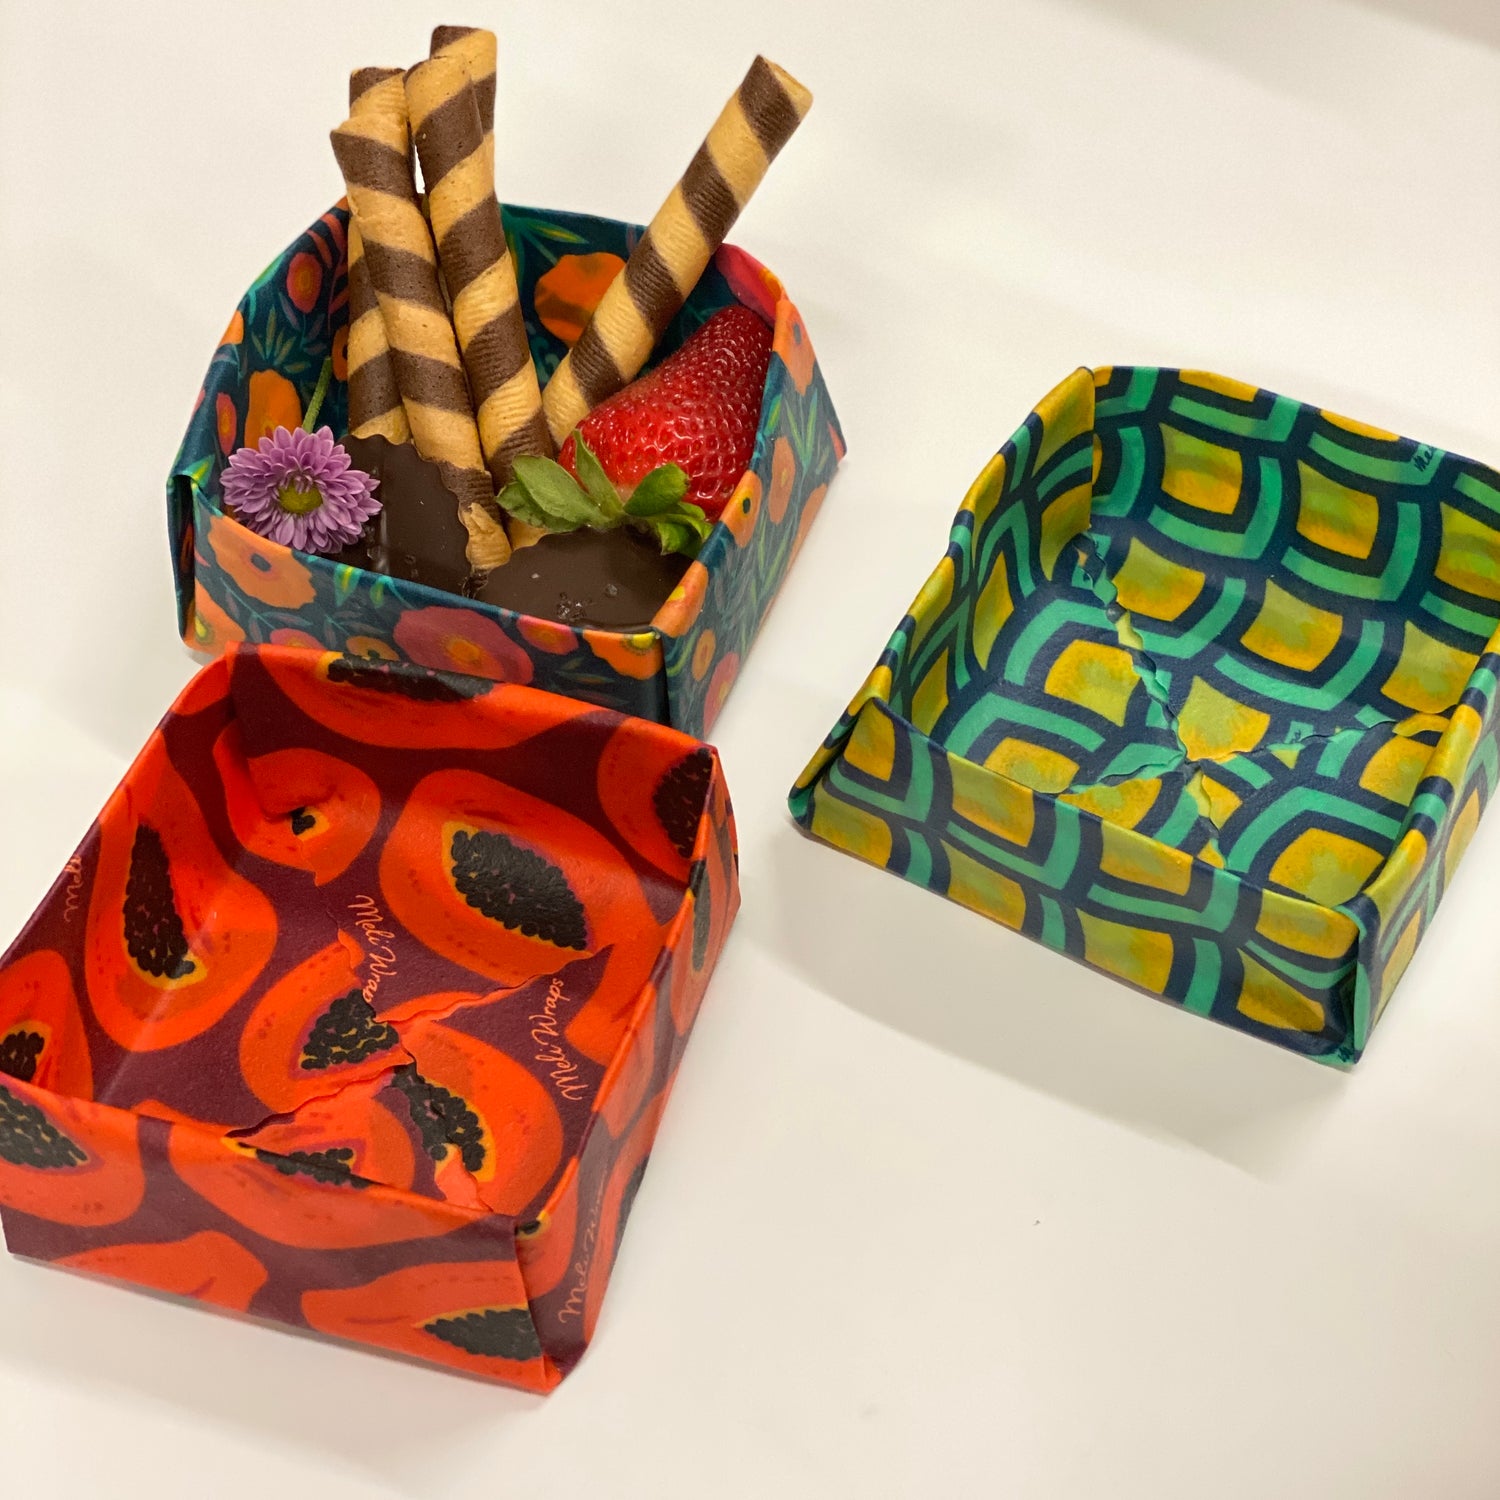 How to Make a Meli Wrap Box